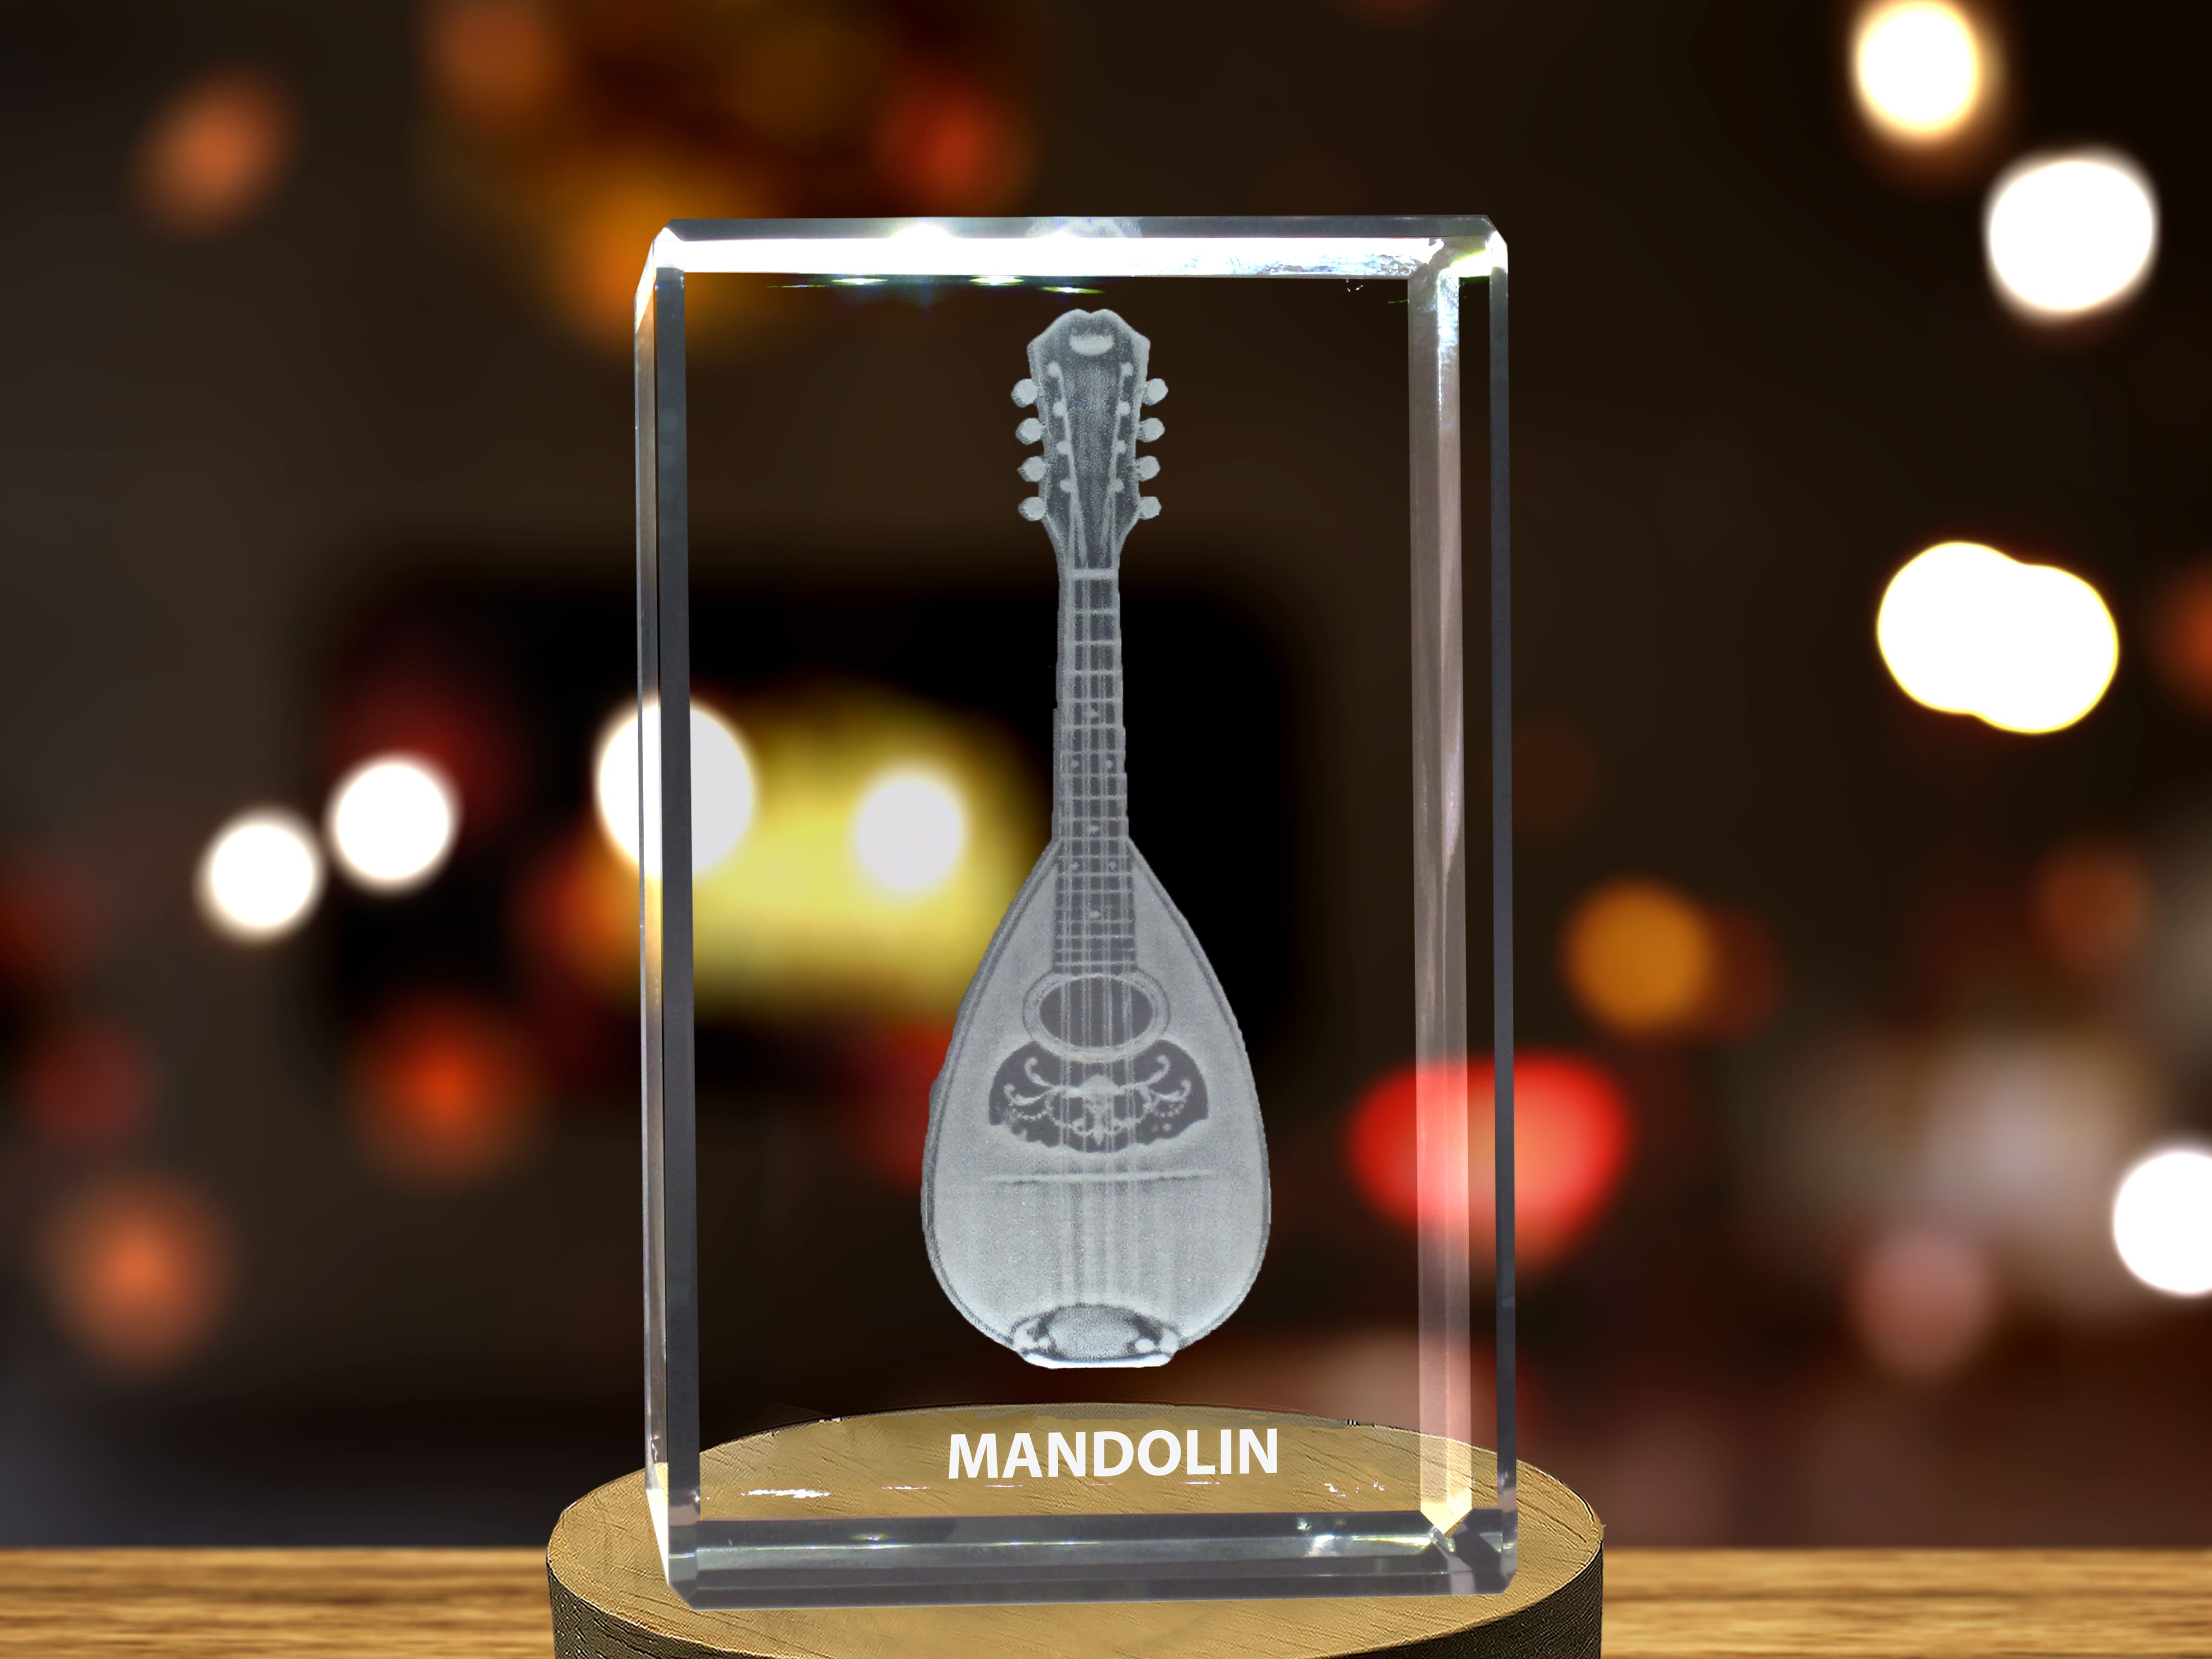 Mandolin 3D Engraved Crystal 3D Engraved Crystal Keepsake/Gift/Decor/Collectible/Souvenir A&B Crystal Collection